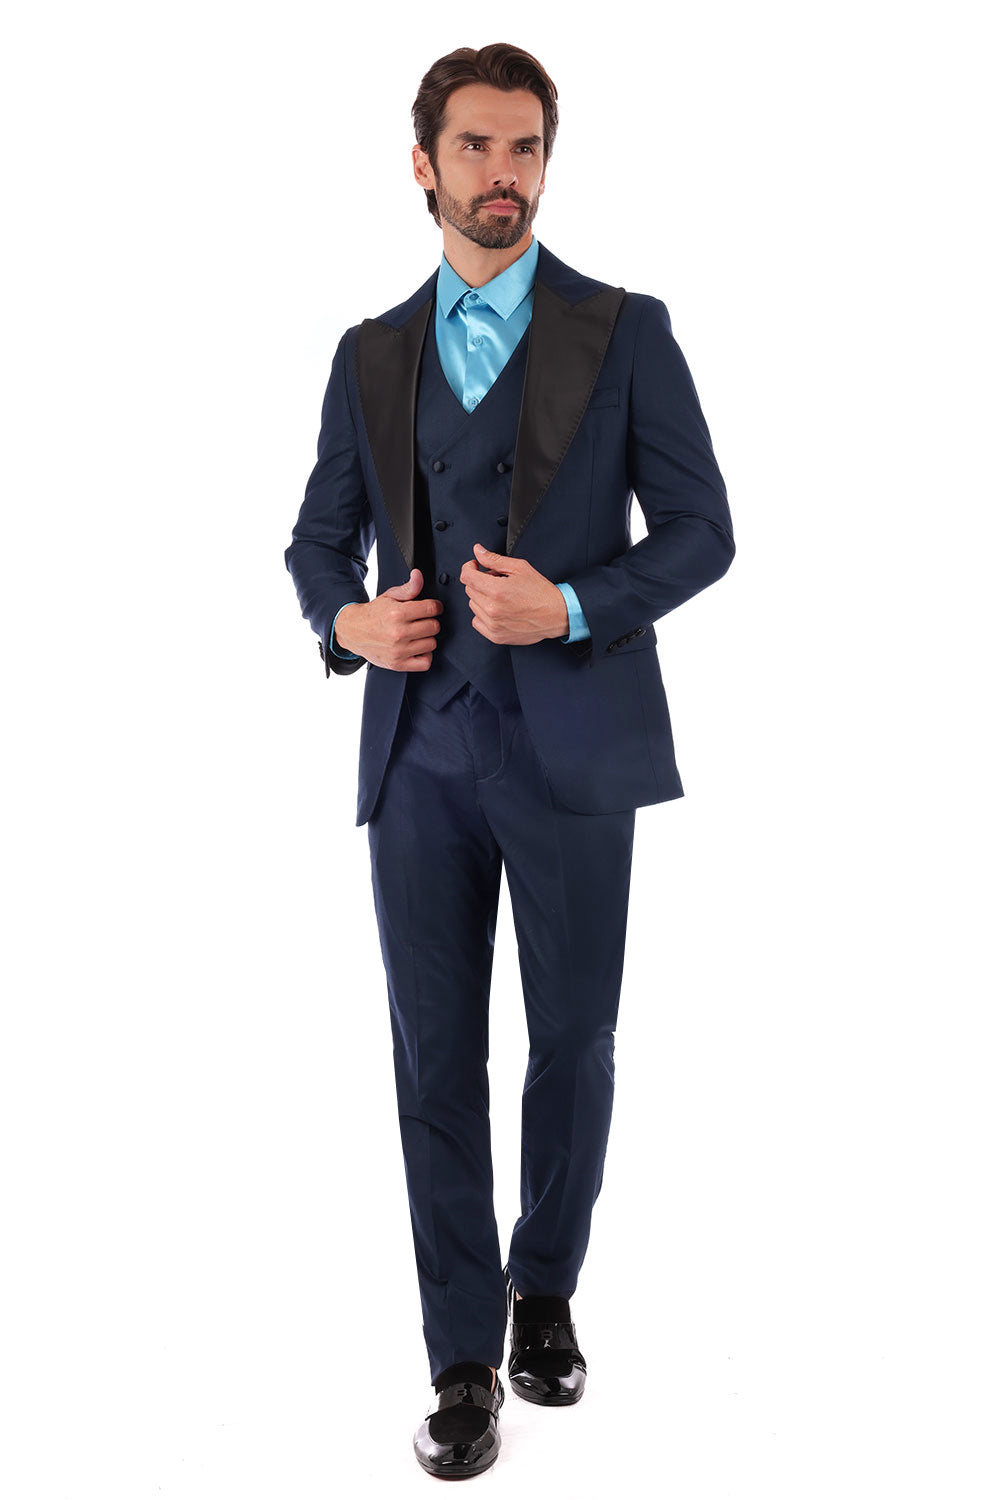 Barabas Men's Solid Color Peak Satin Lapel Suit Set 4SU13 Navy